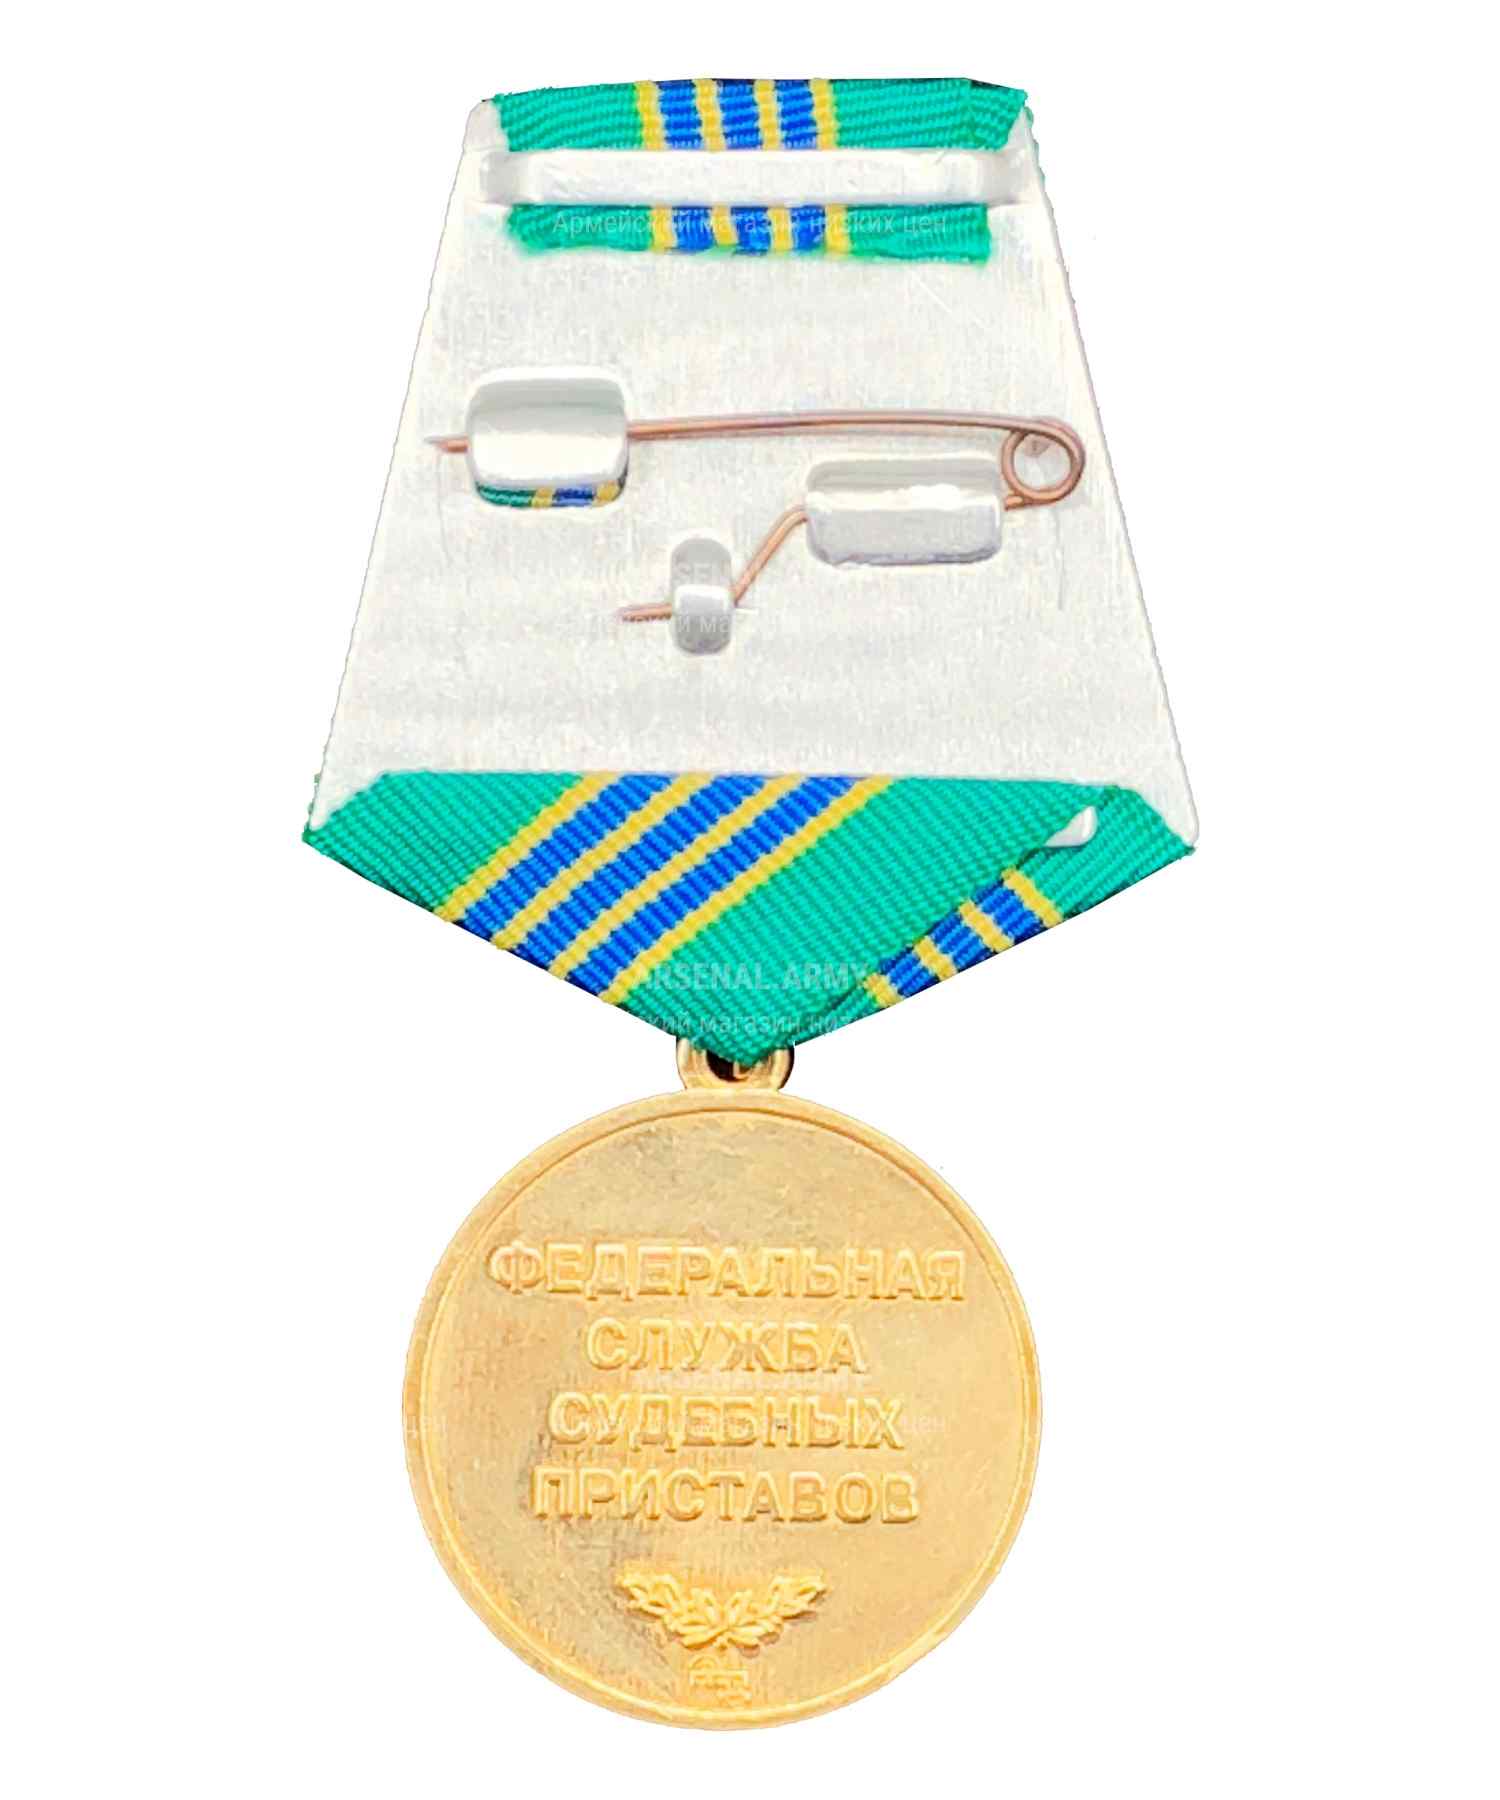 Медаль "За службу ФССП"